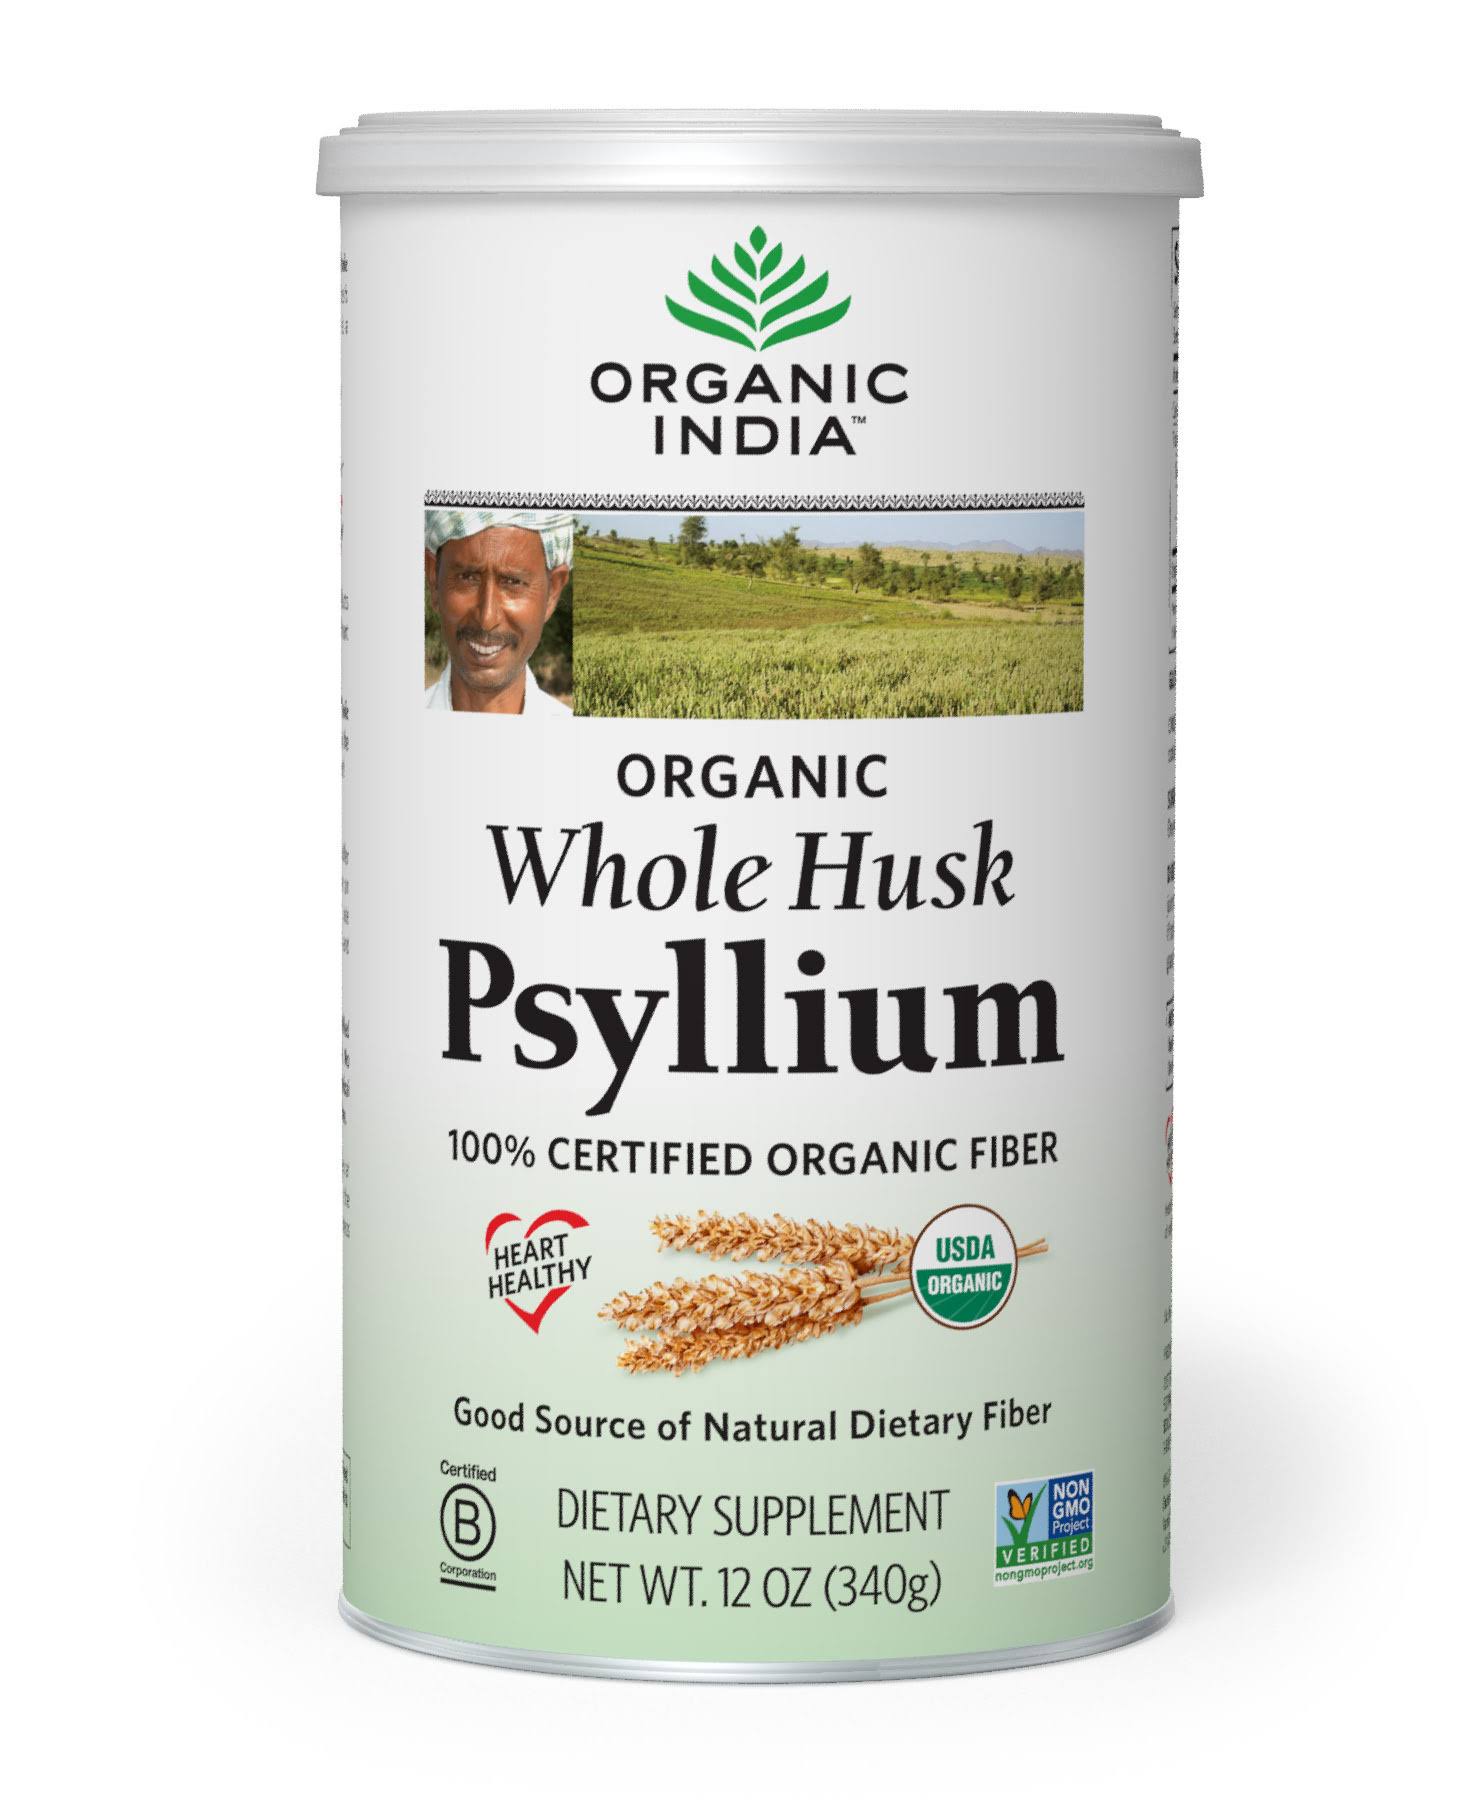 Organic India Whole Husk Psyllium Supplement - 12oz